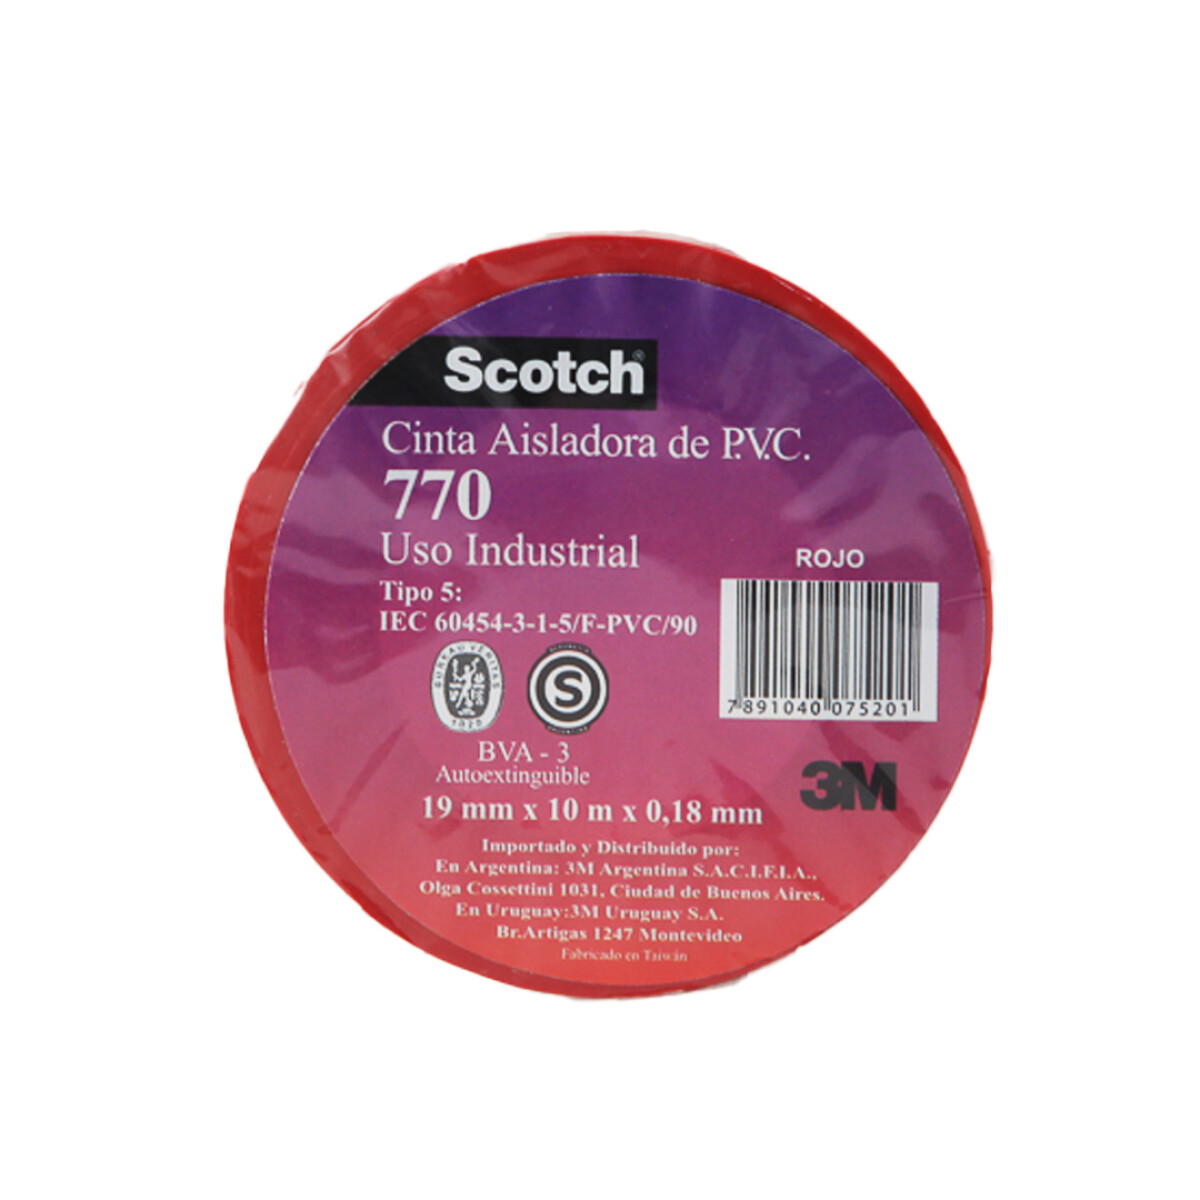 Cinta uso profesional PVC Scotch 770 3M - Rojo 19 mm. x 10 m. 